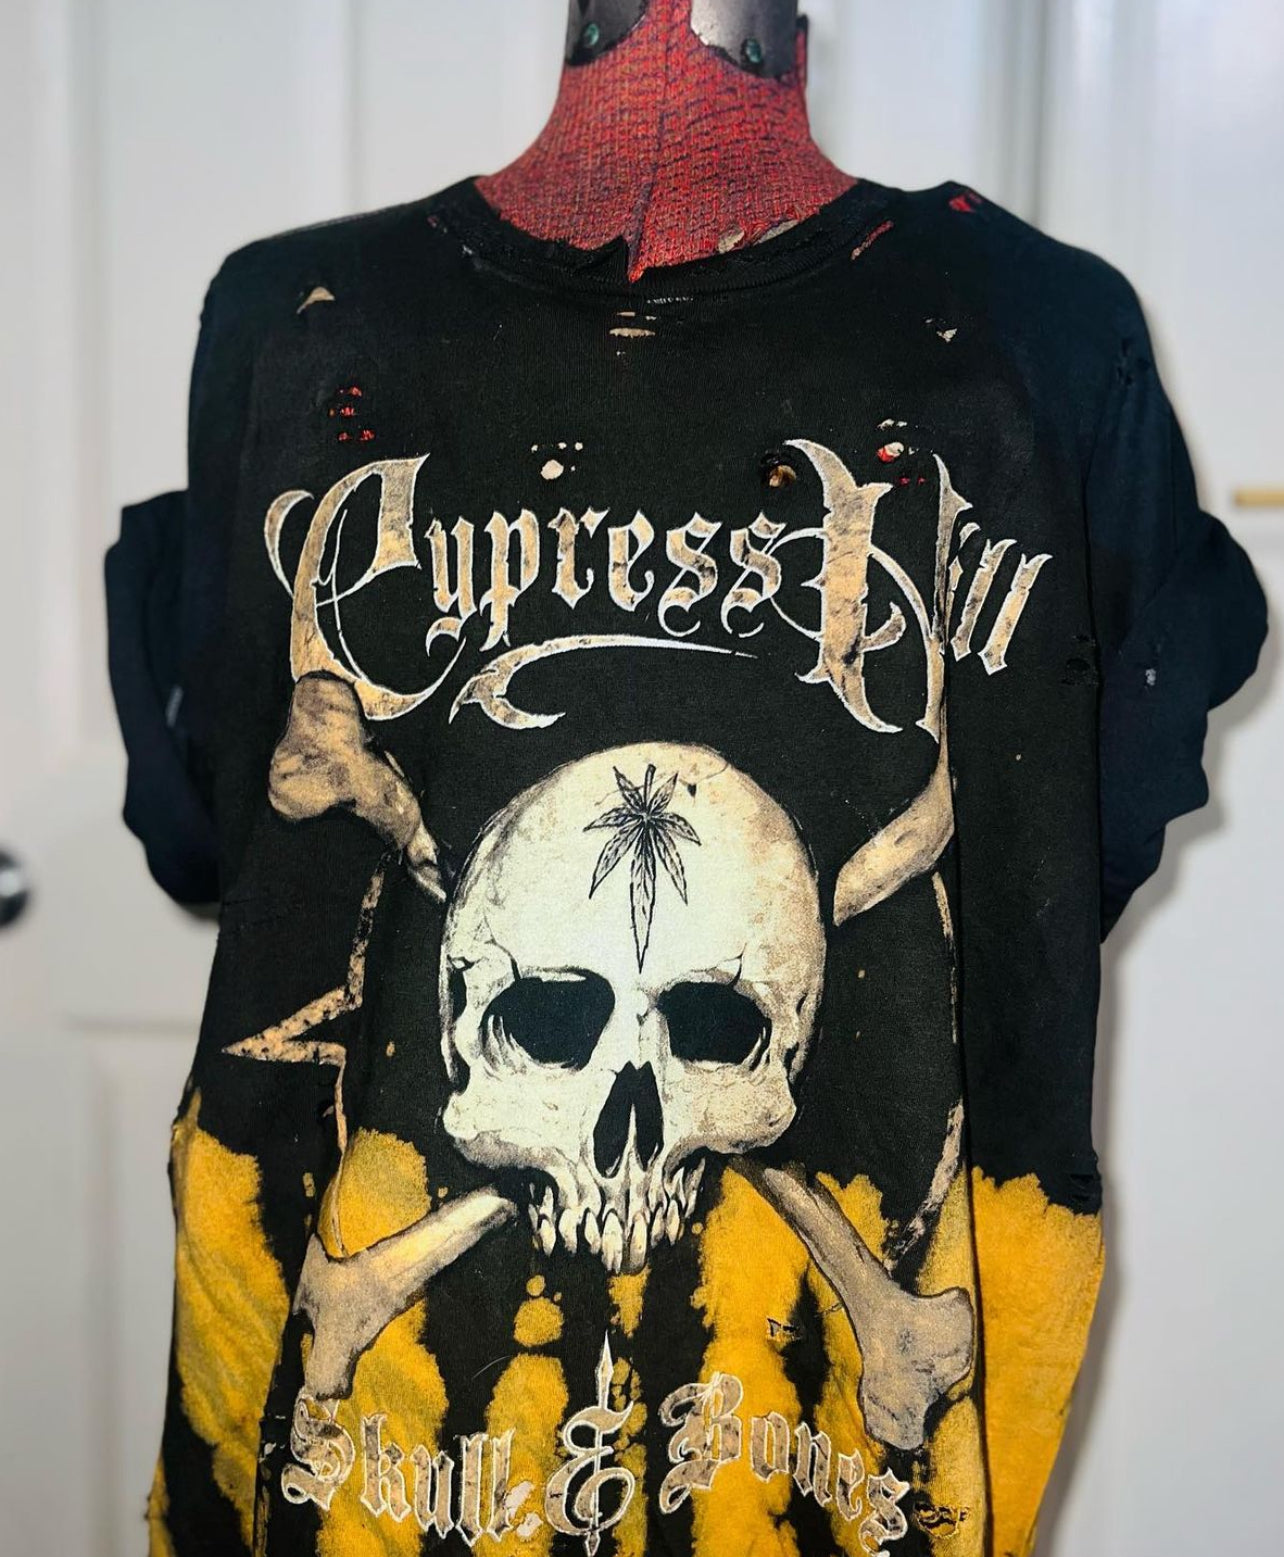 Cypress Hill “Skull & Bones” Oversized Tie Dye Distressed Tee